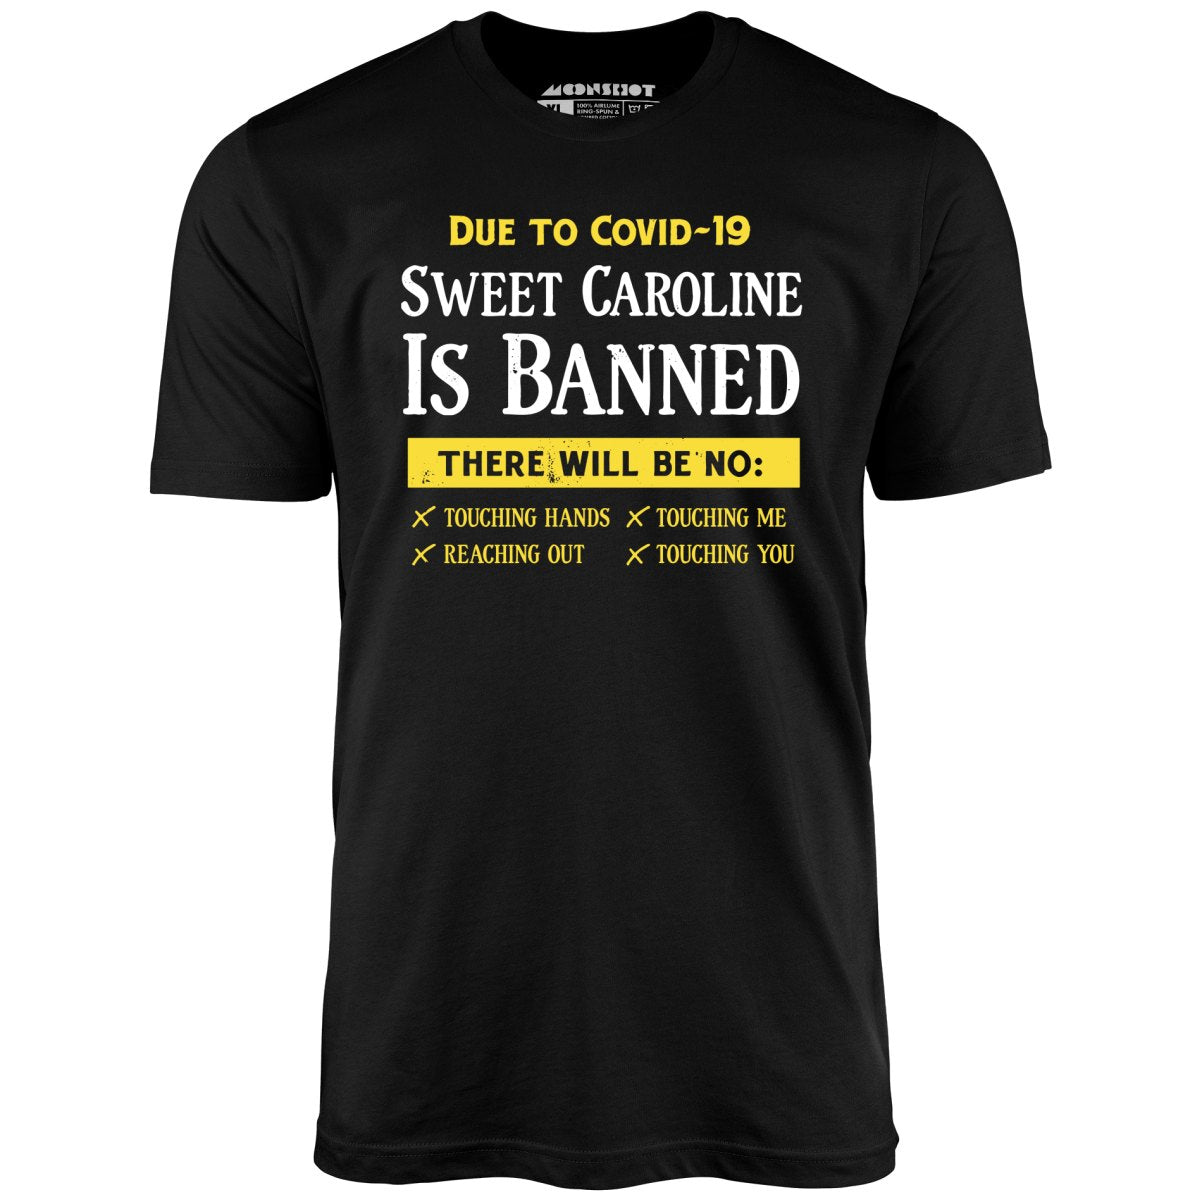 Sweet Caroline is Banned - Unisex T-Shirt